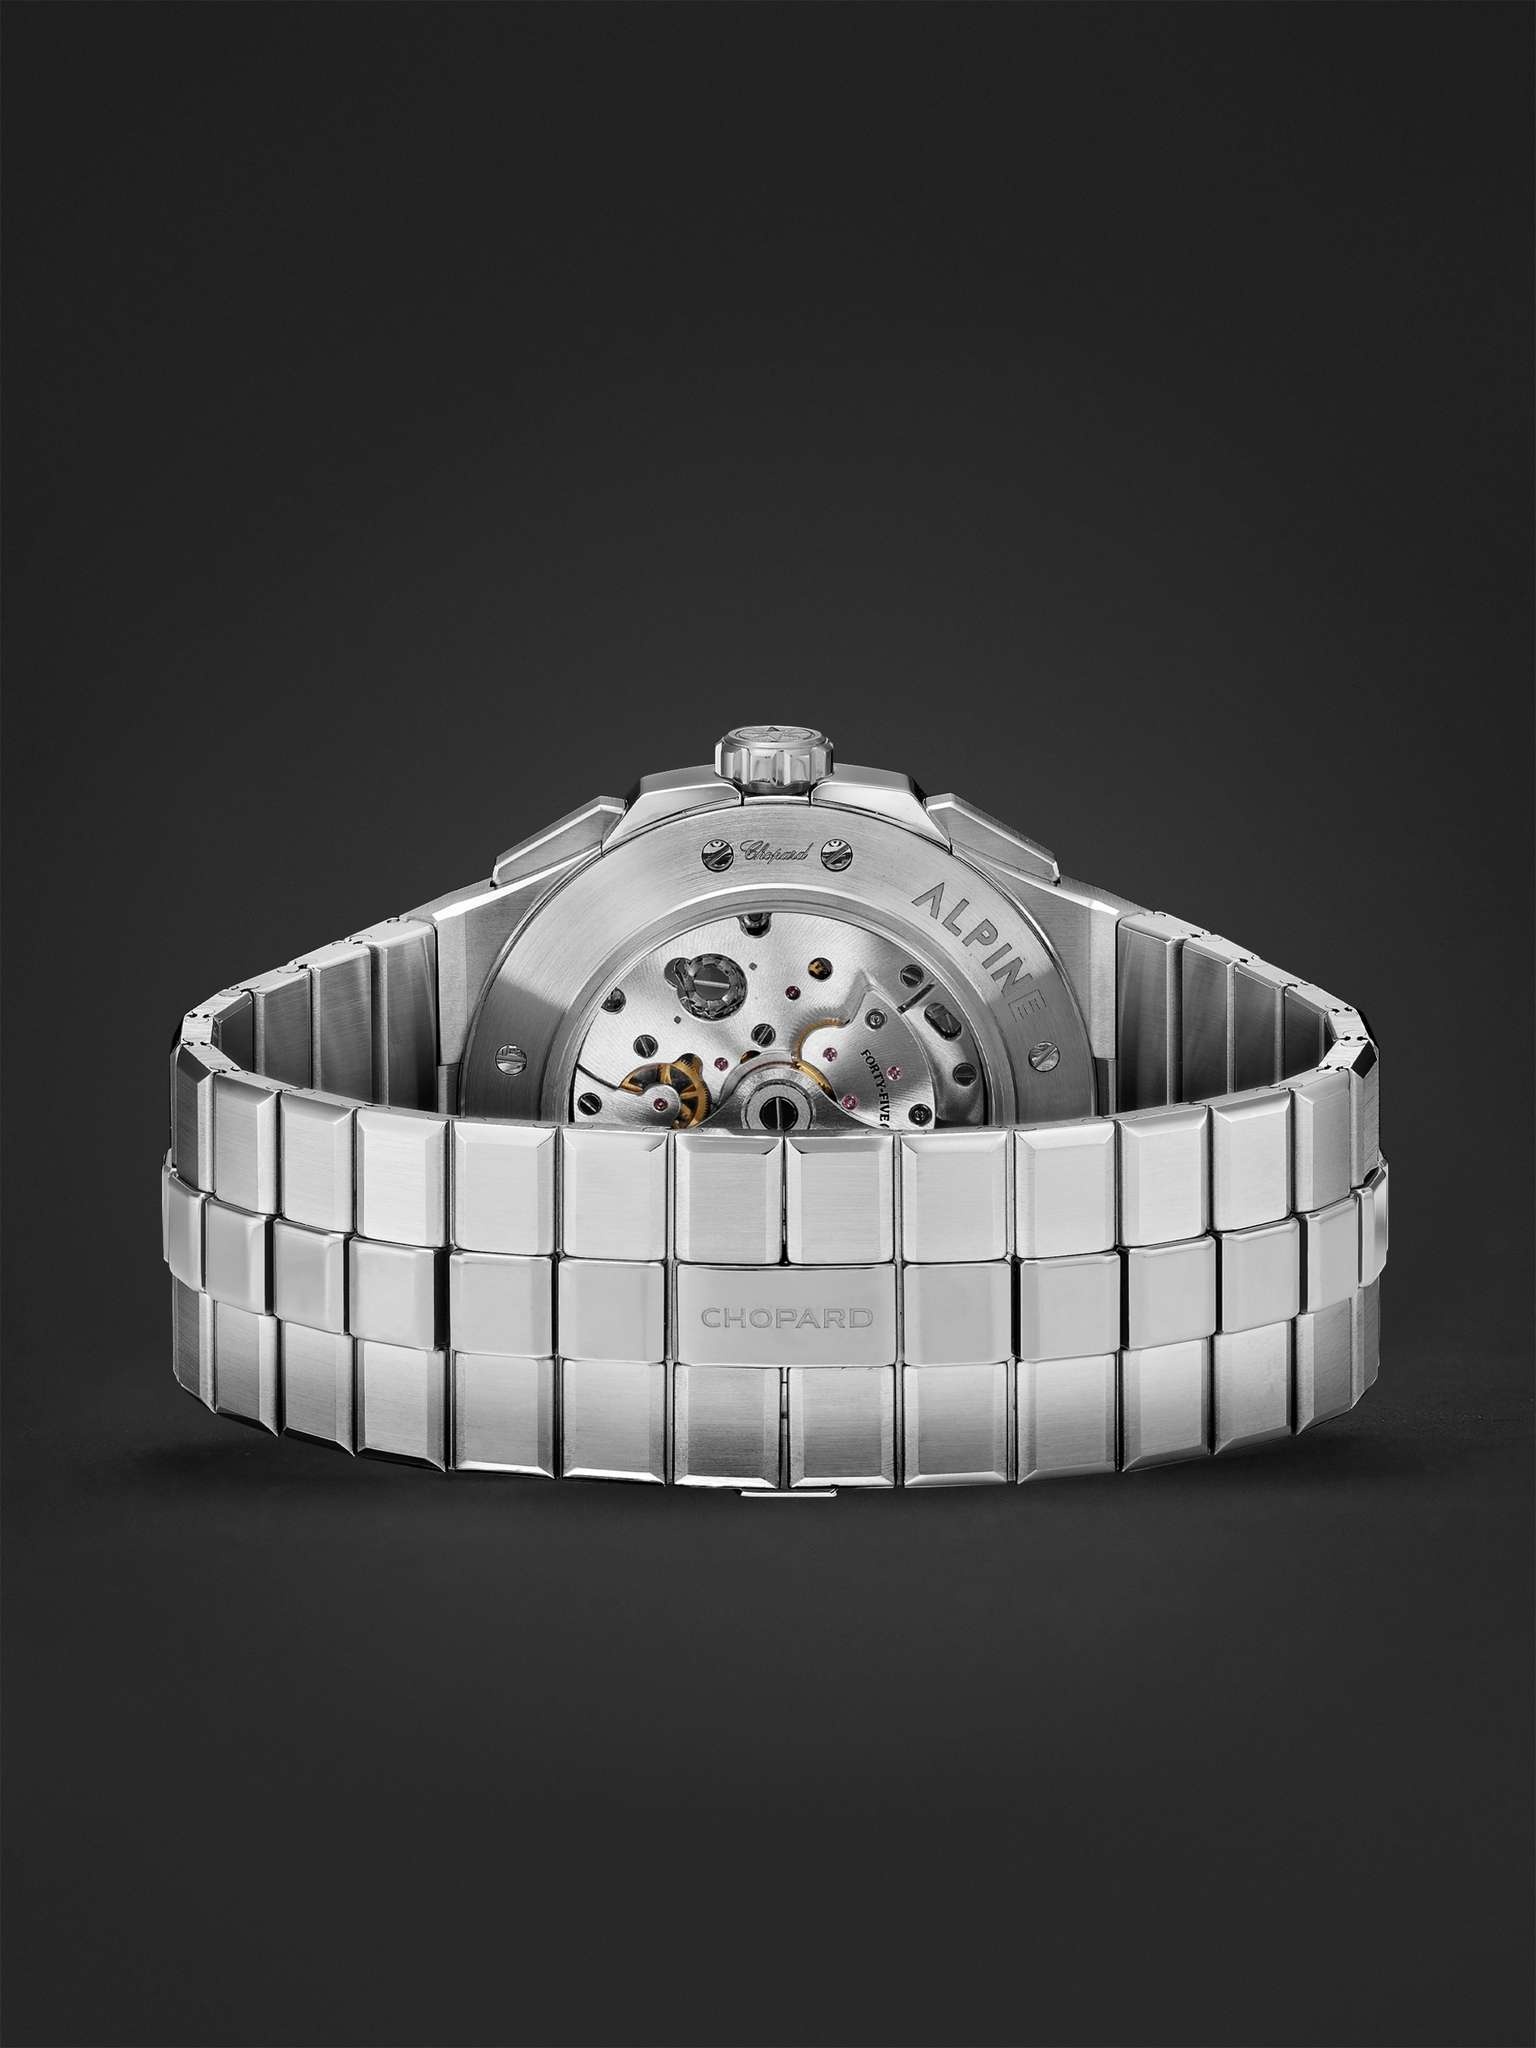 Alpine Eagle XL Chrono Automatic 44mm Lucent Steel Watch, Ref. No. 298609-3001 - 7